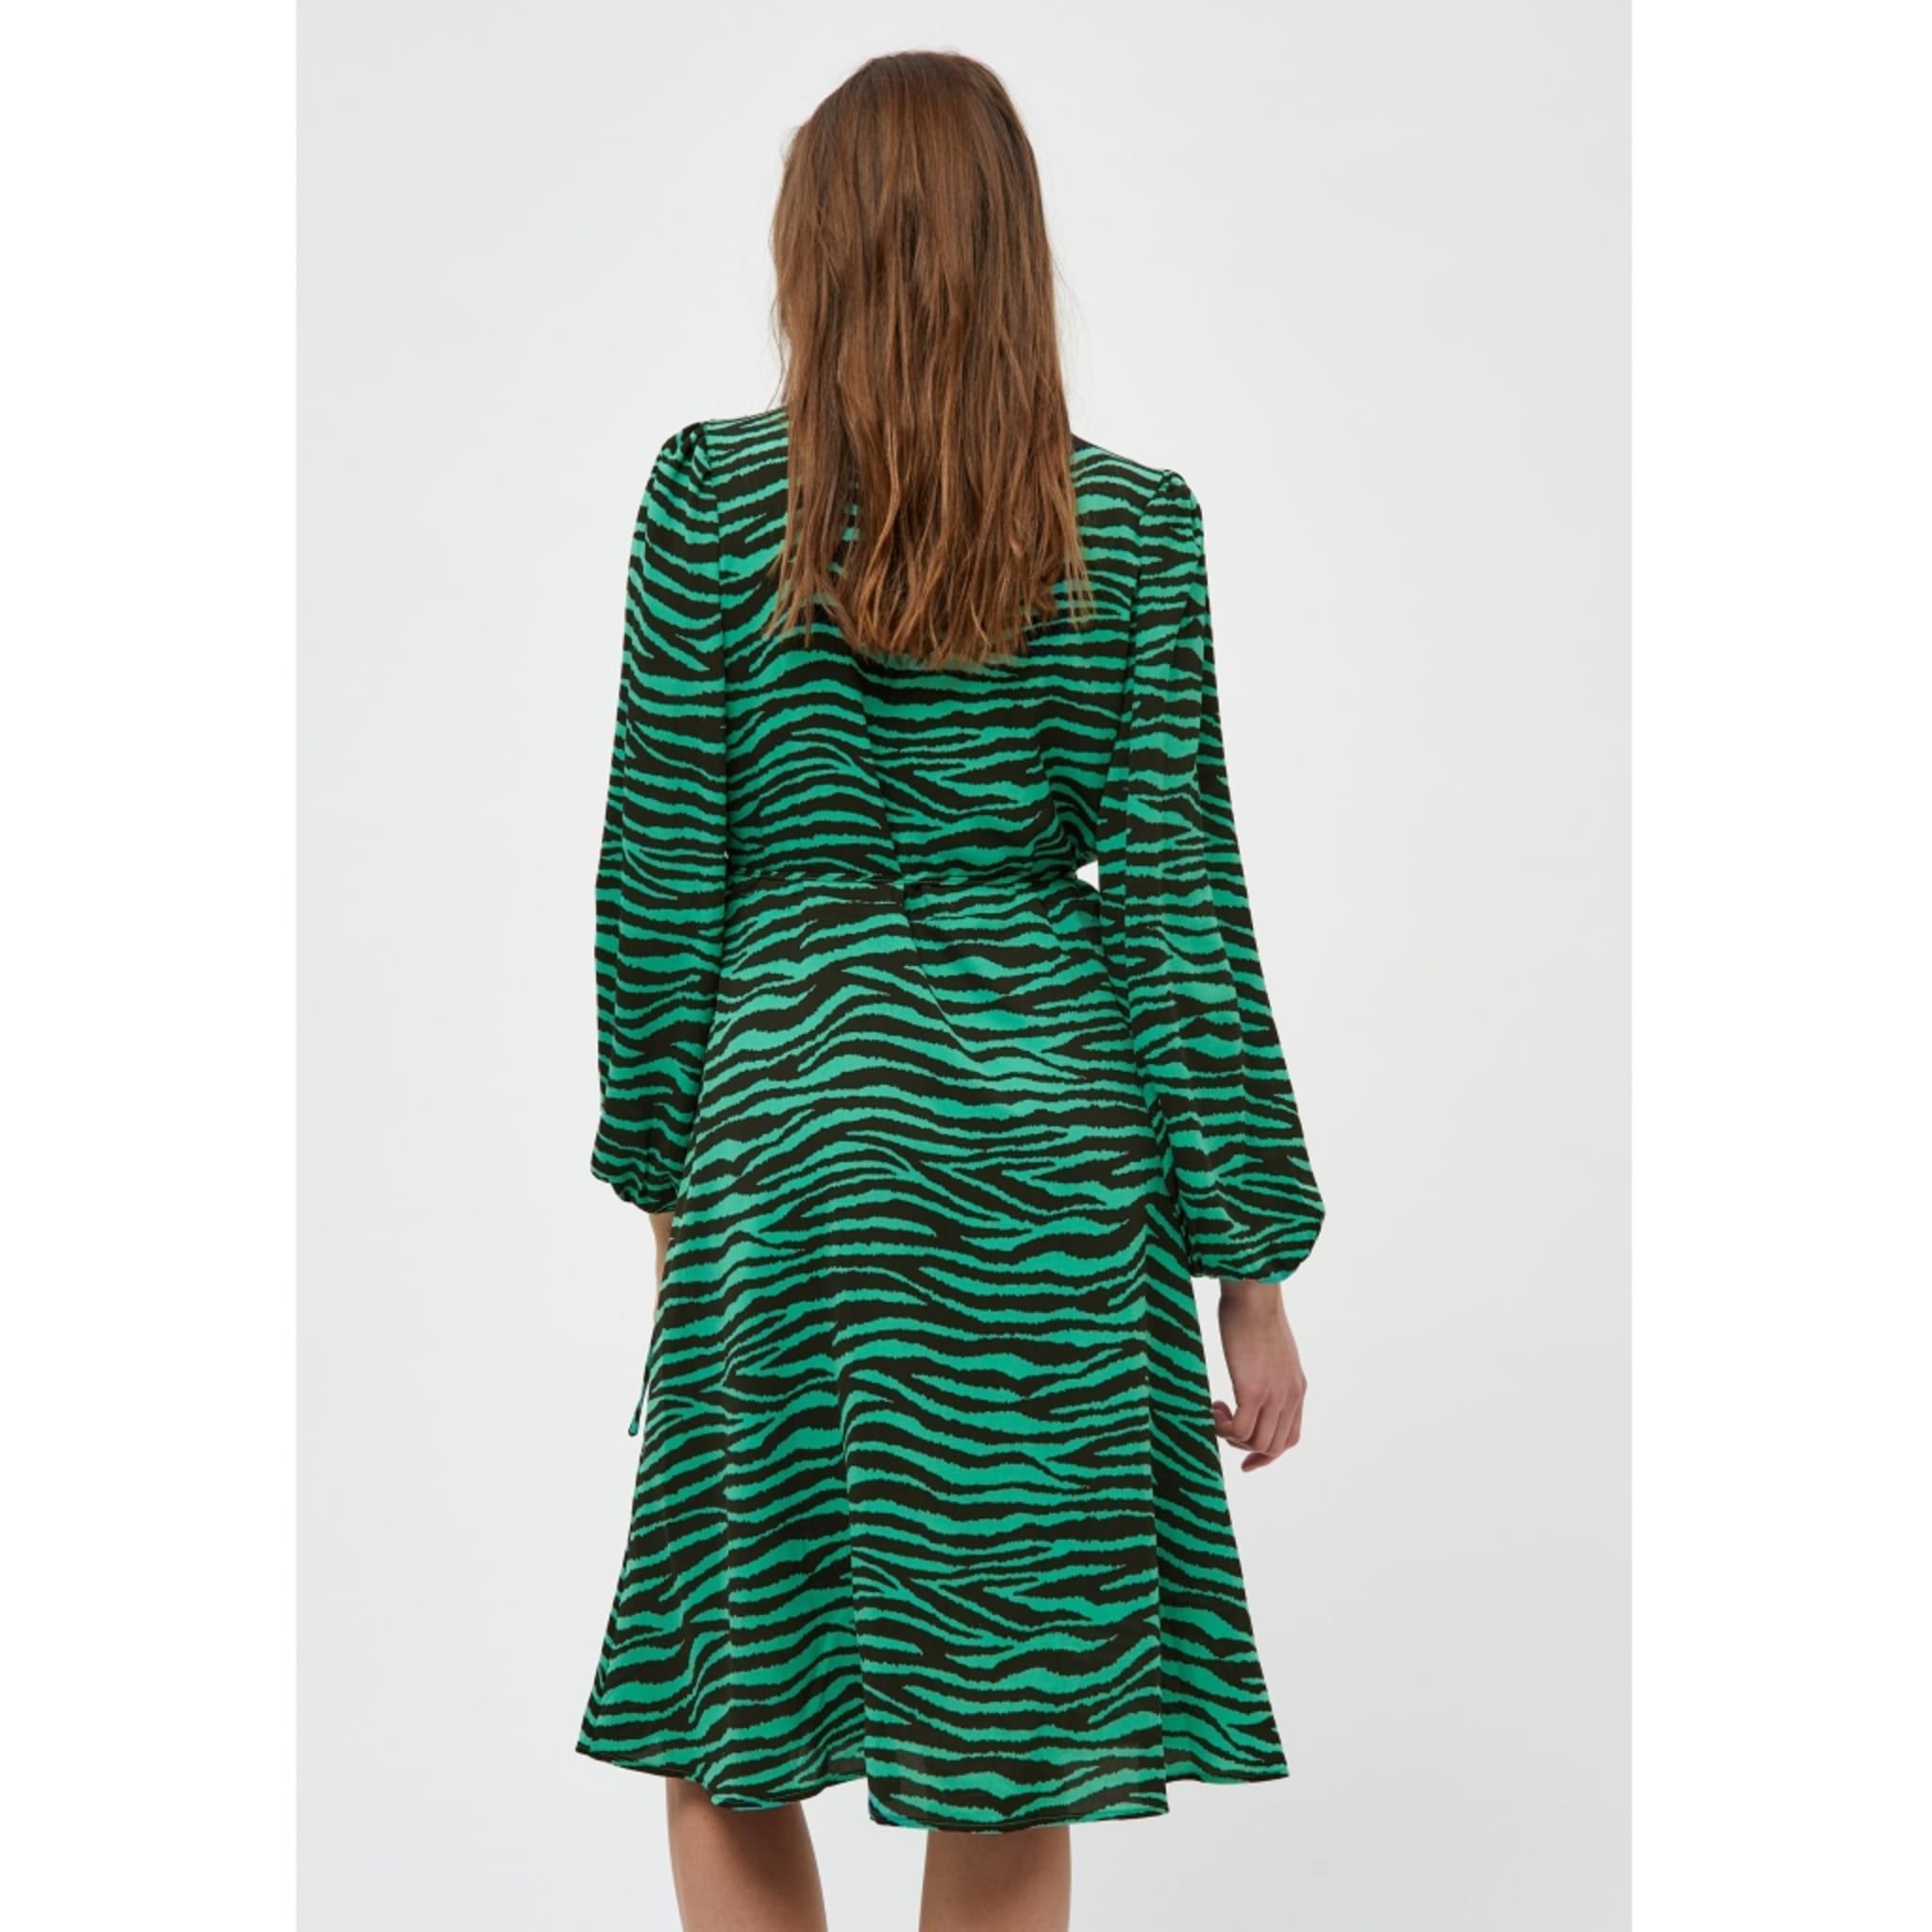 Evelyn Wrap Dress, apple green animal print